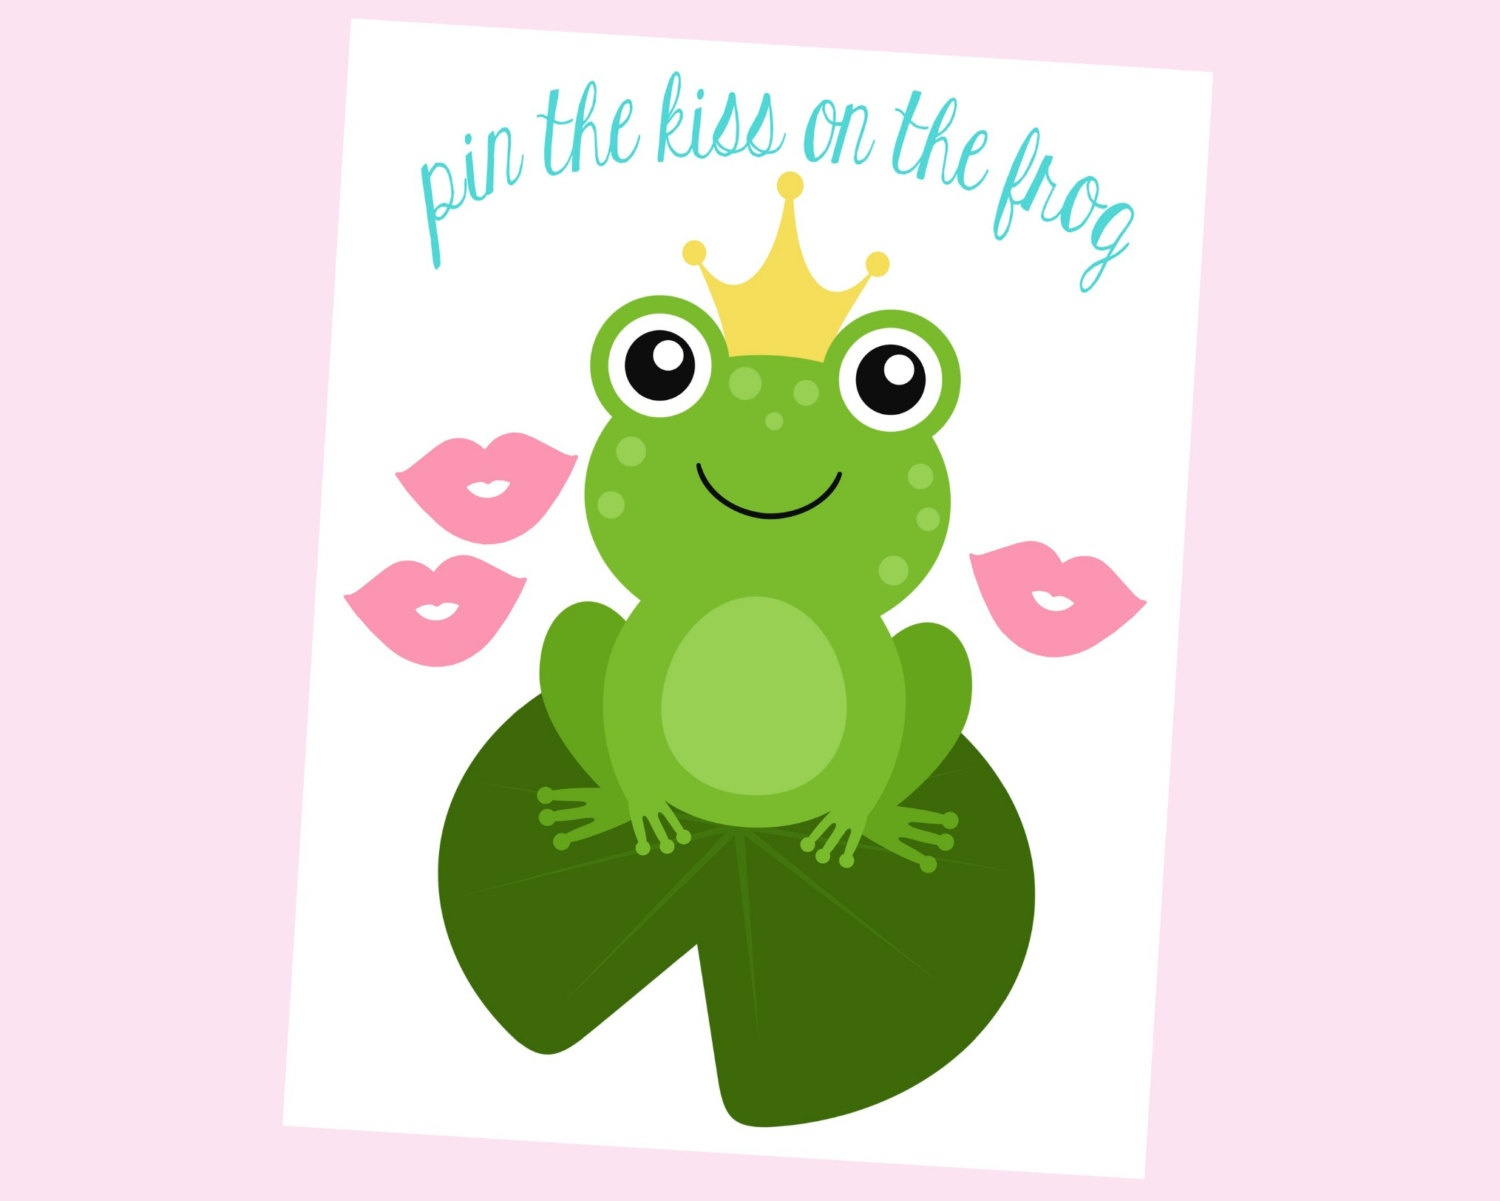 Pin The Kiss On The Frog. Printable Game For Princess Party. | Etsy - Pin The Kiss On The Frog Free Printable